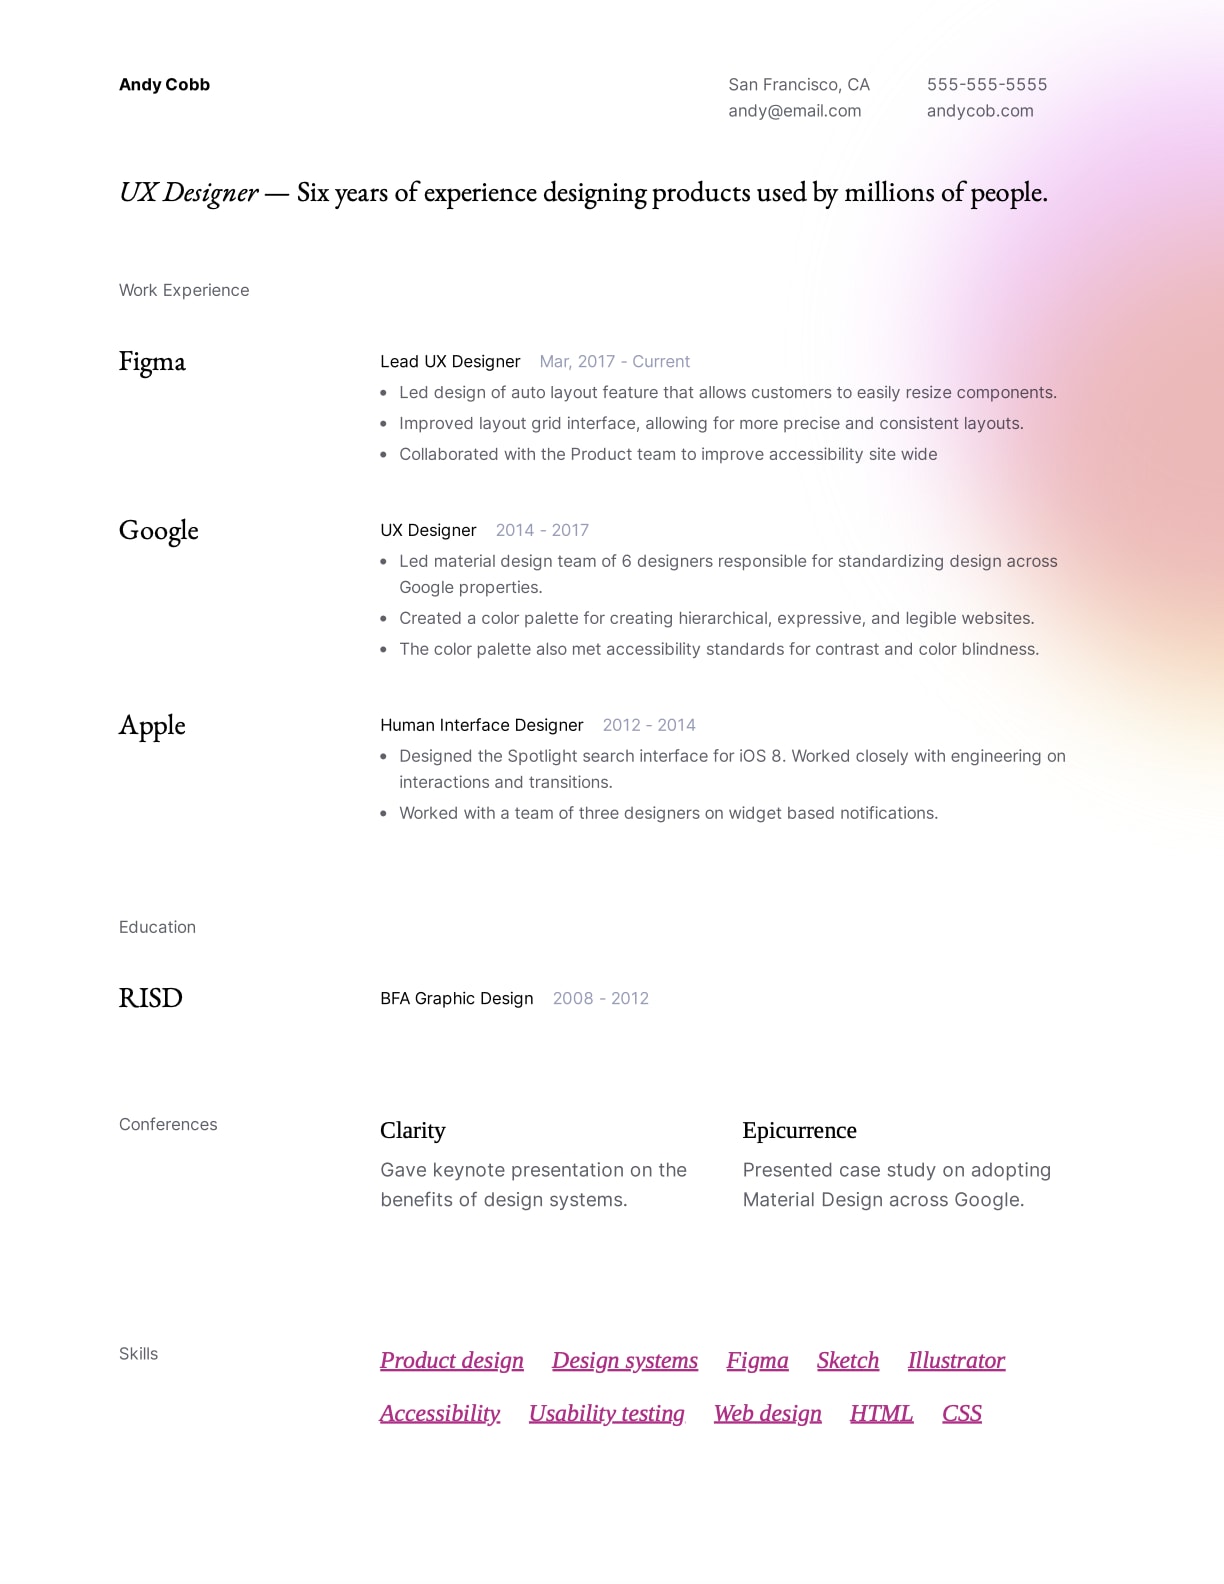 UX Designer resume sample template